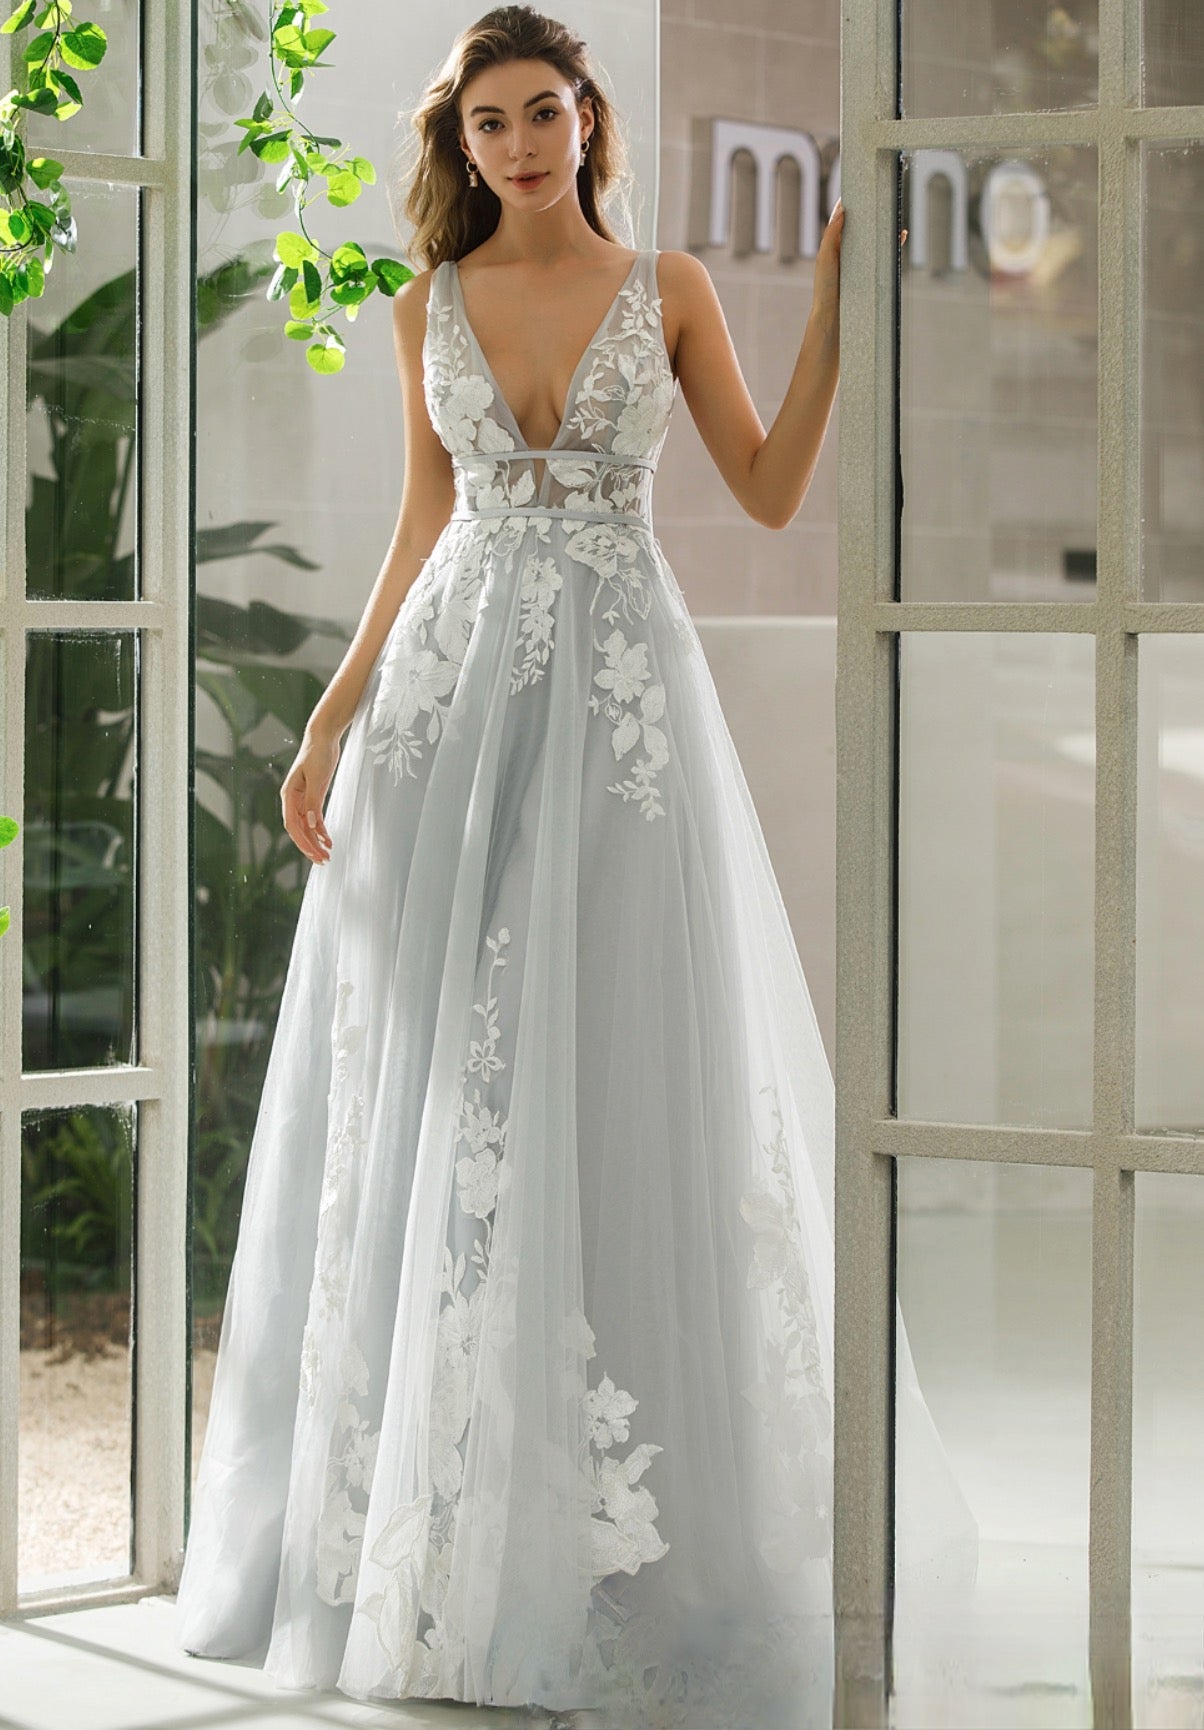 Plunging V-Neck Wedding Dress With Floral Motifs